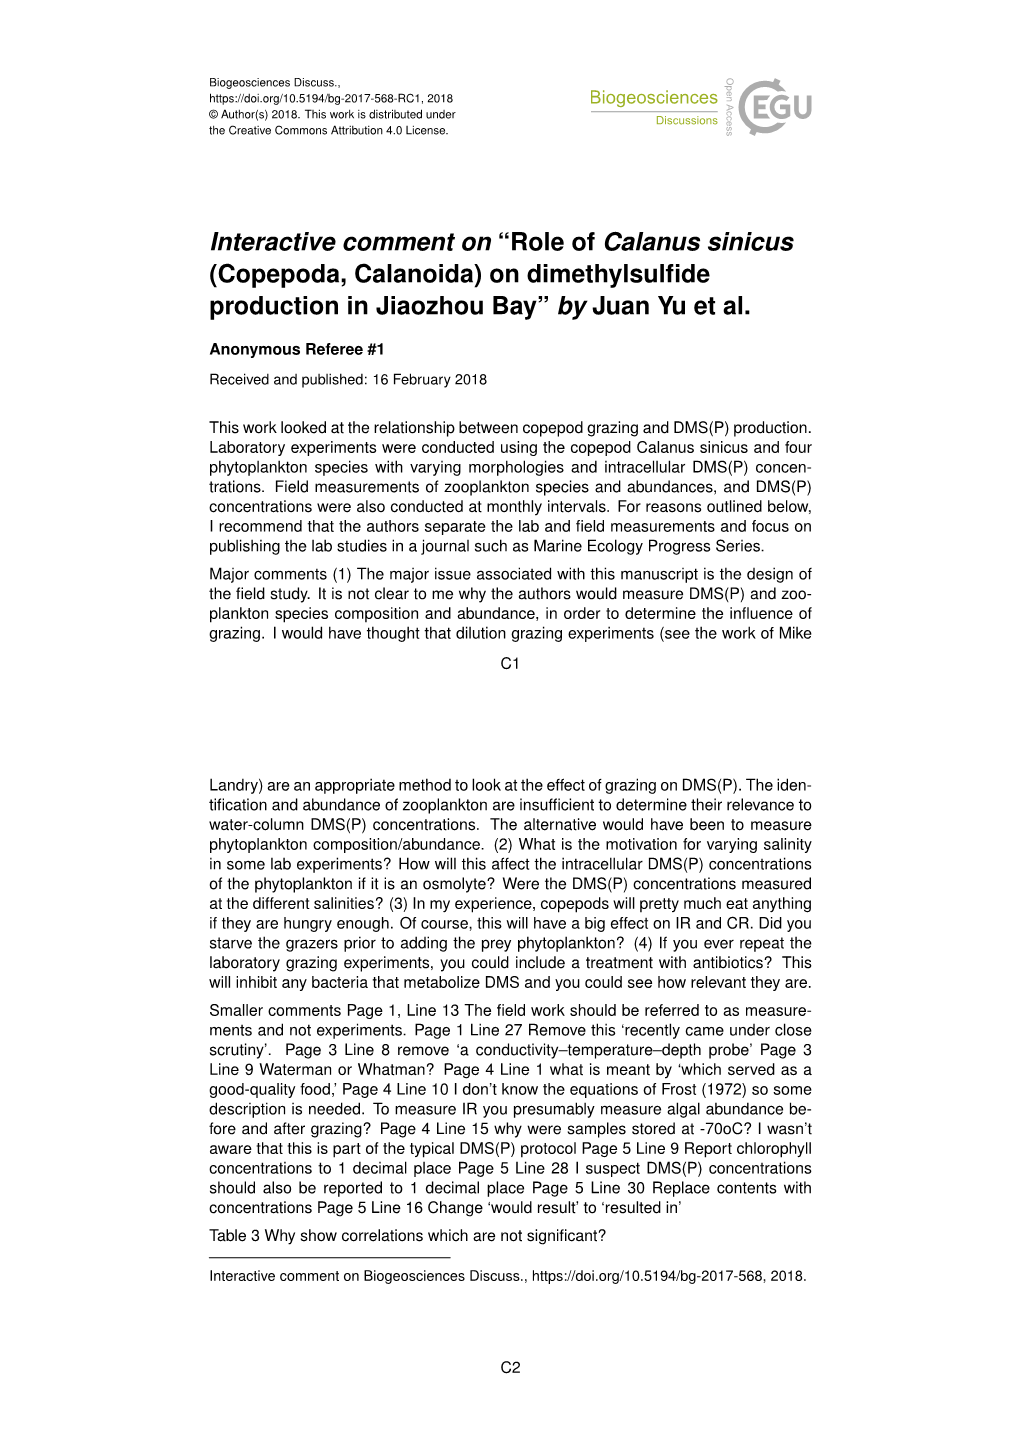 Role of Calanus Sinicus (Copepoda, Calanoida) on Dimethylsulfide Production in Jiaozhou